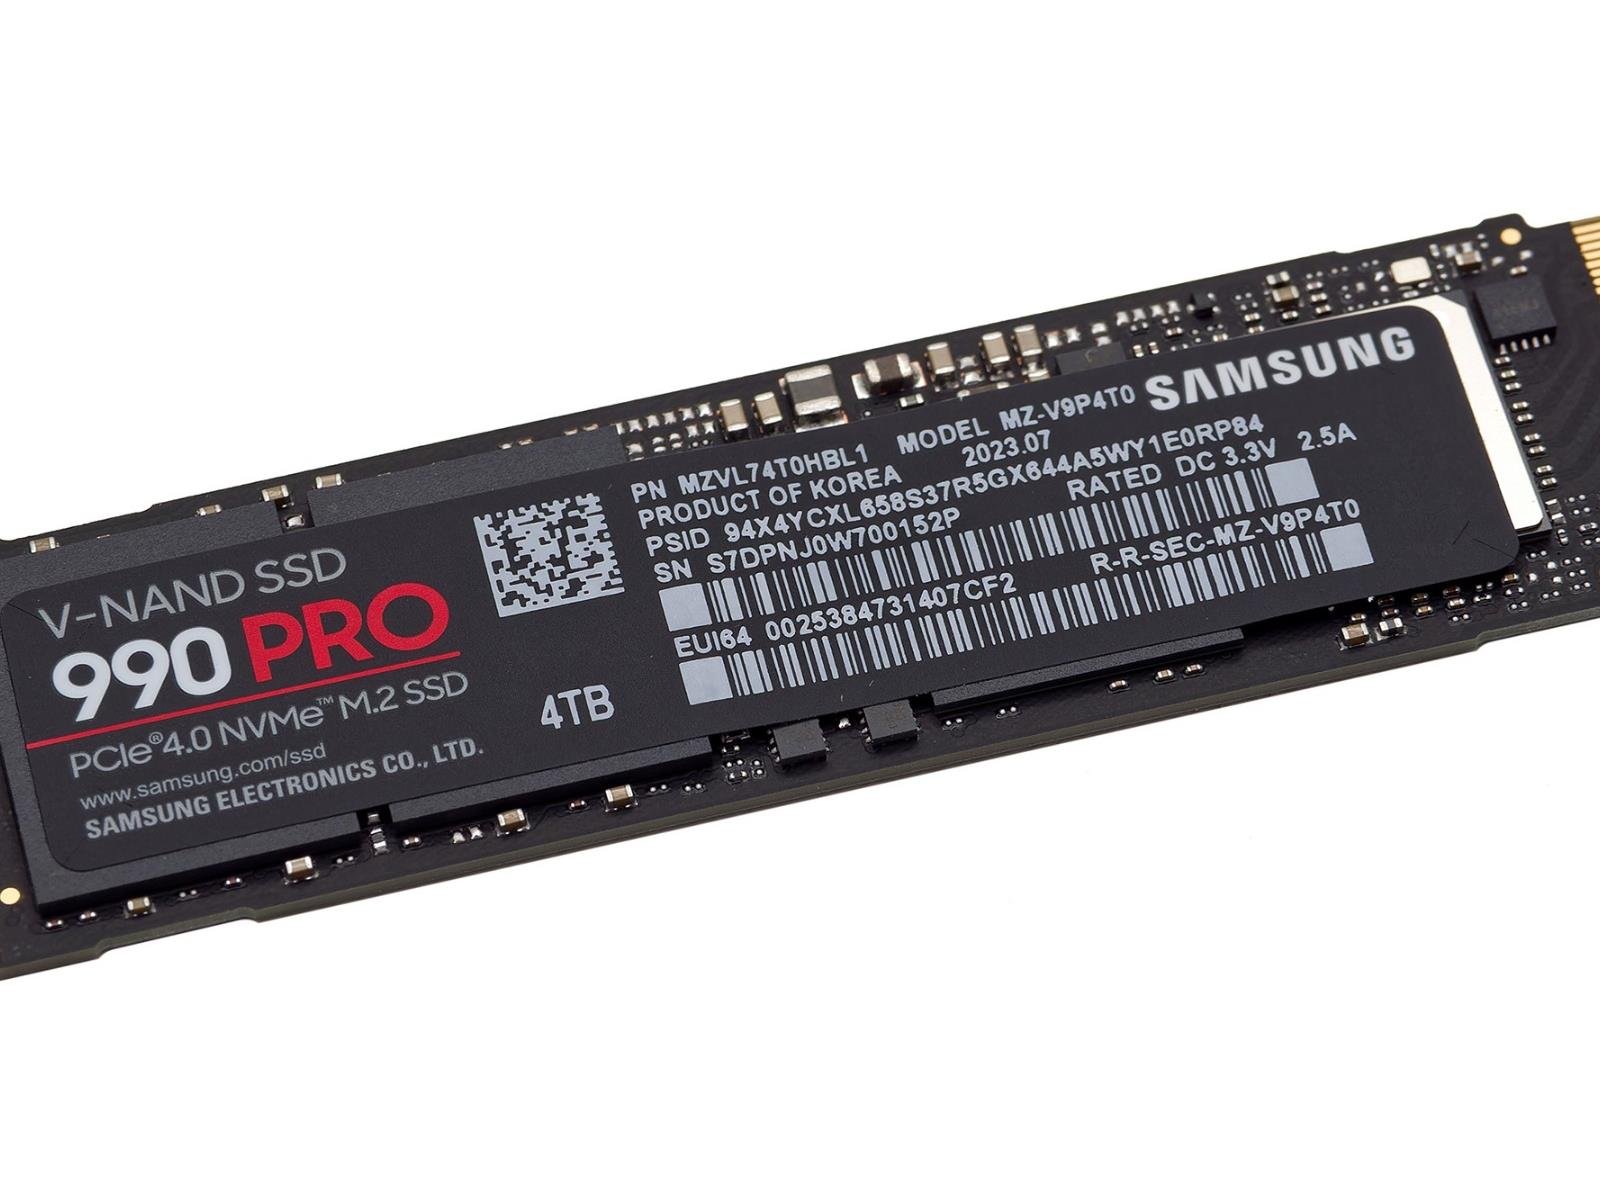 Samsung 990 Pro 4TB SSD PS5 Test - Any Good? 